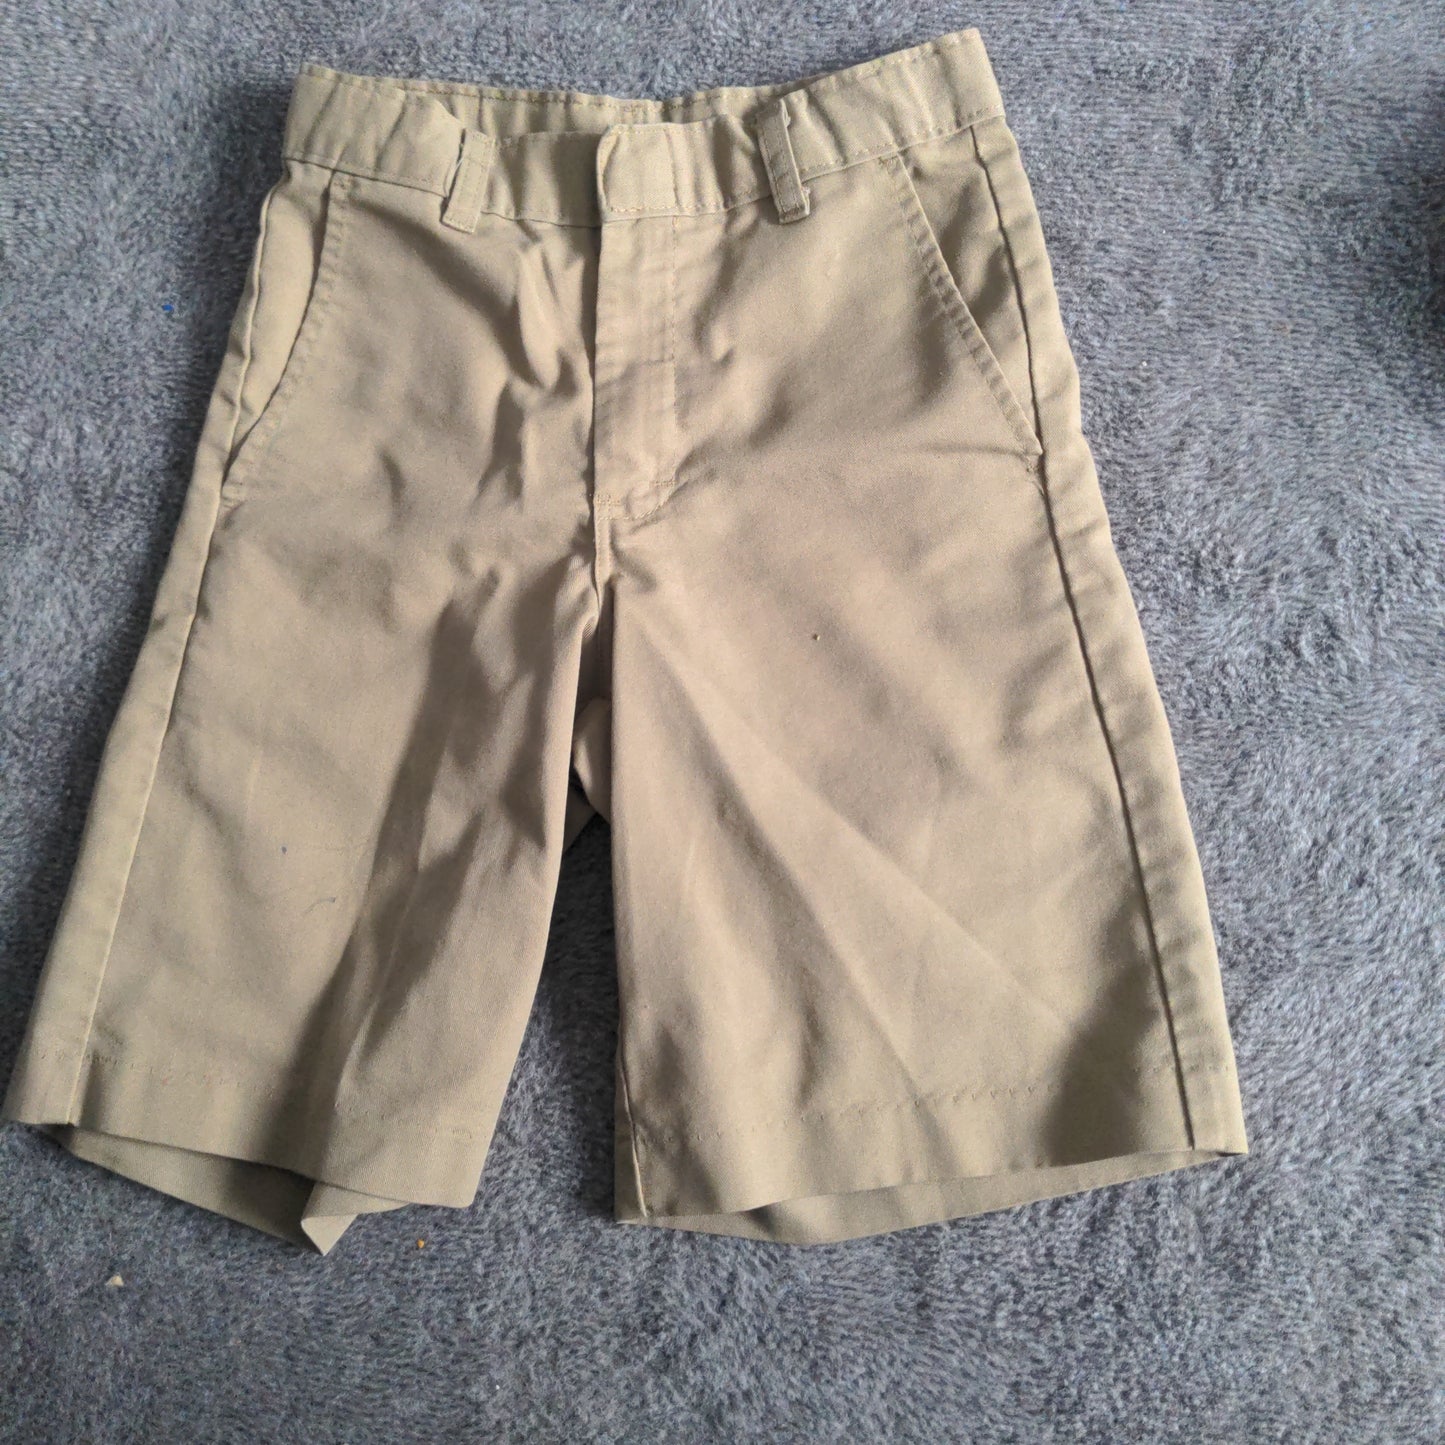 Dickies khaki shorts size 12